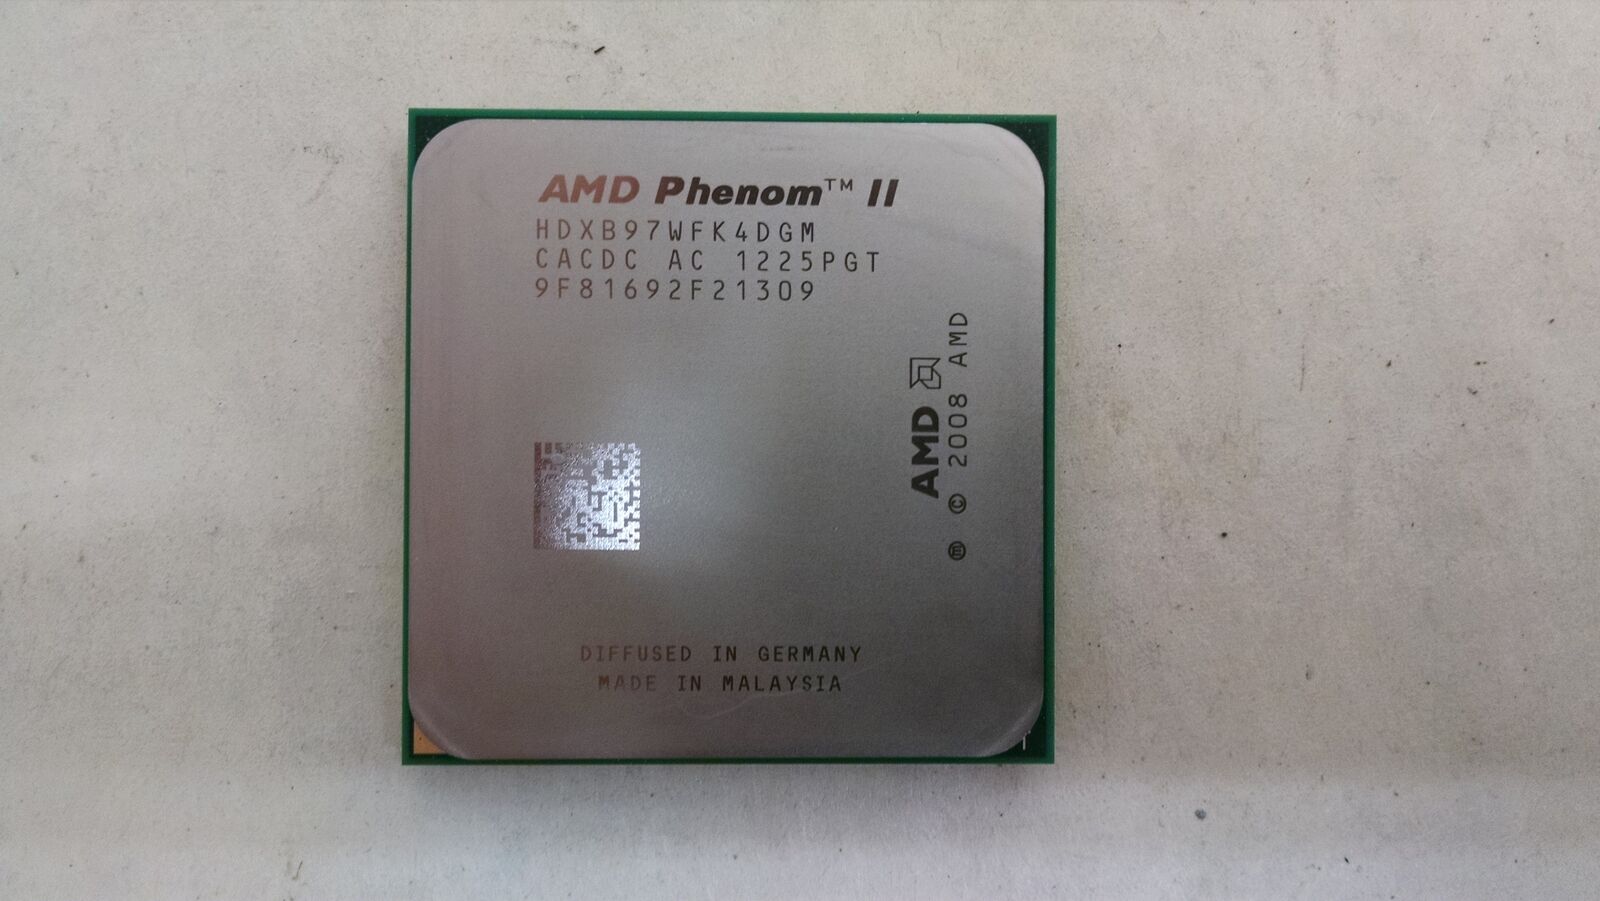 AMD HDXB97WFK4DGM Phenom II B97 Socket AM3 3.2GHz Desktop CPU